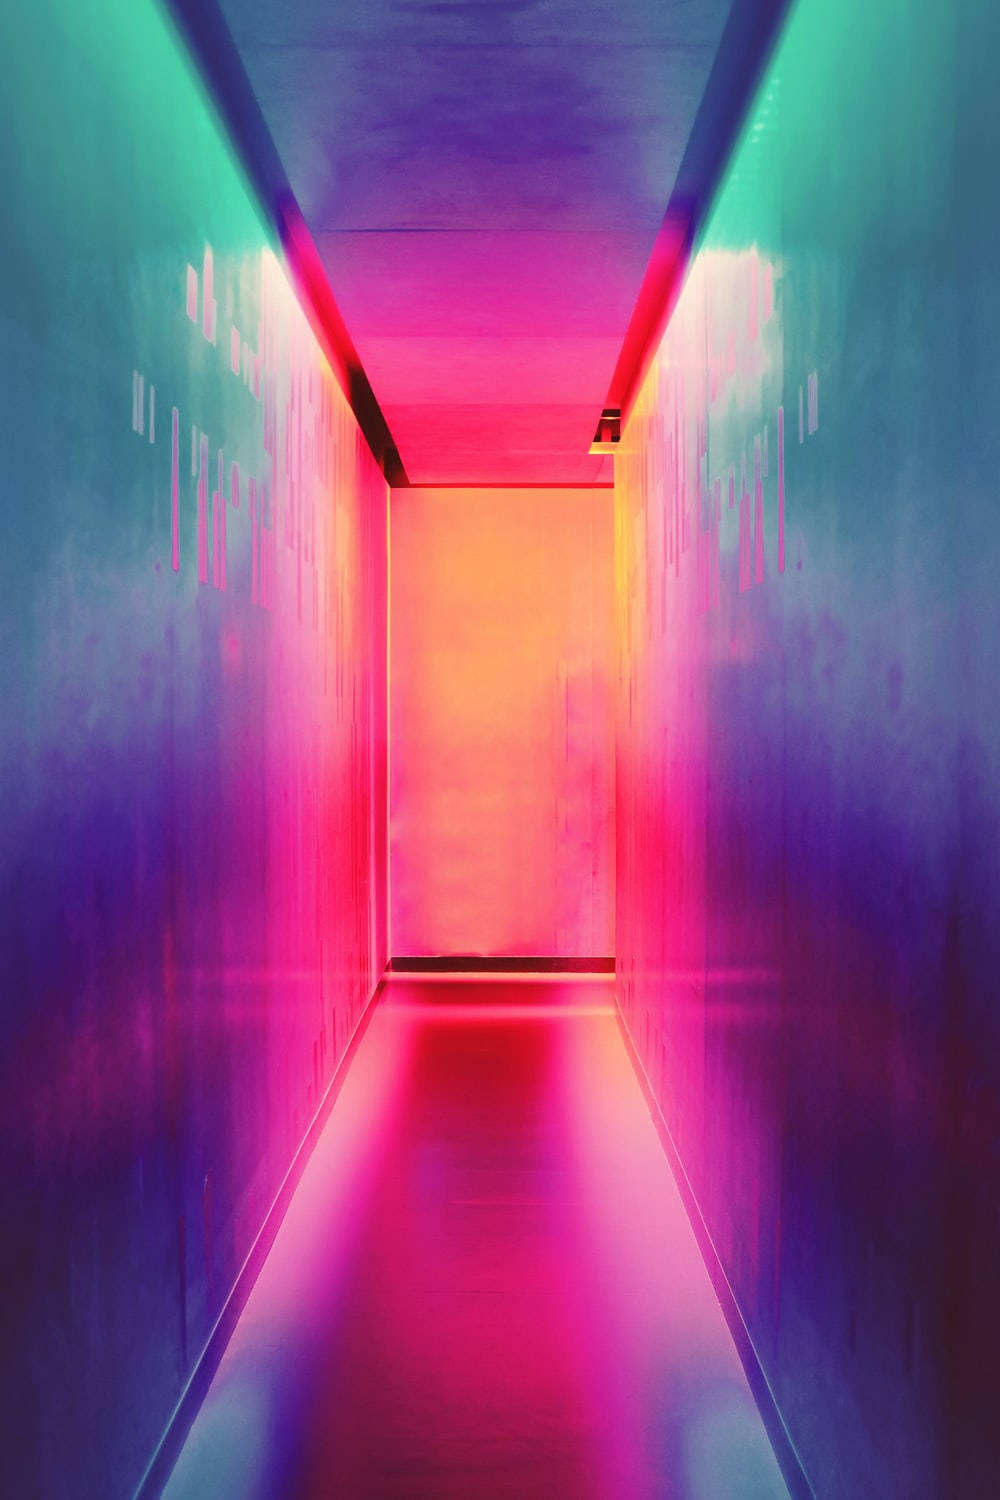 The Neon Hallway Iphone 11